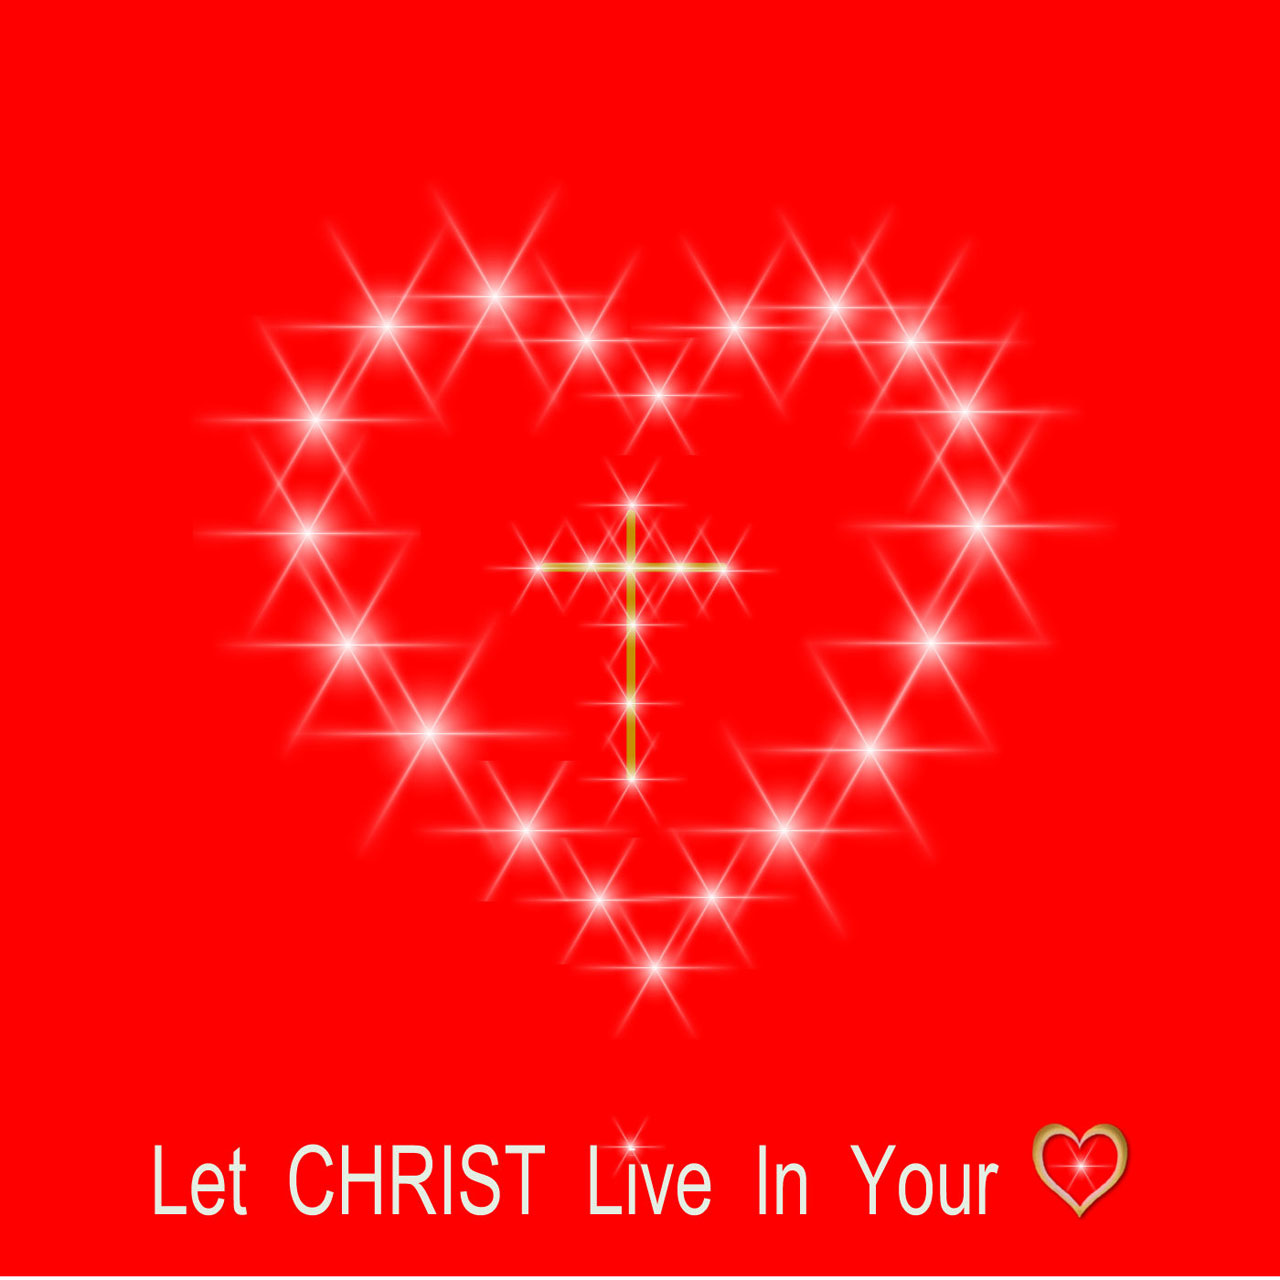 Christian religious symbol